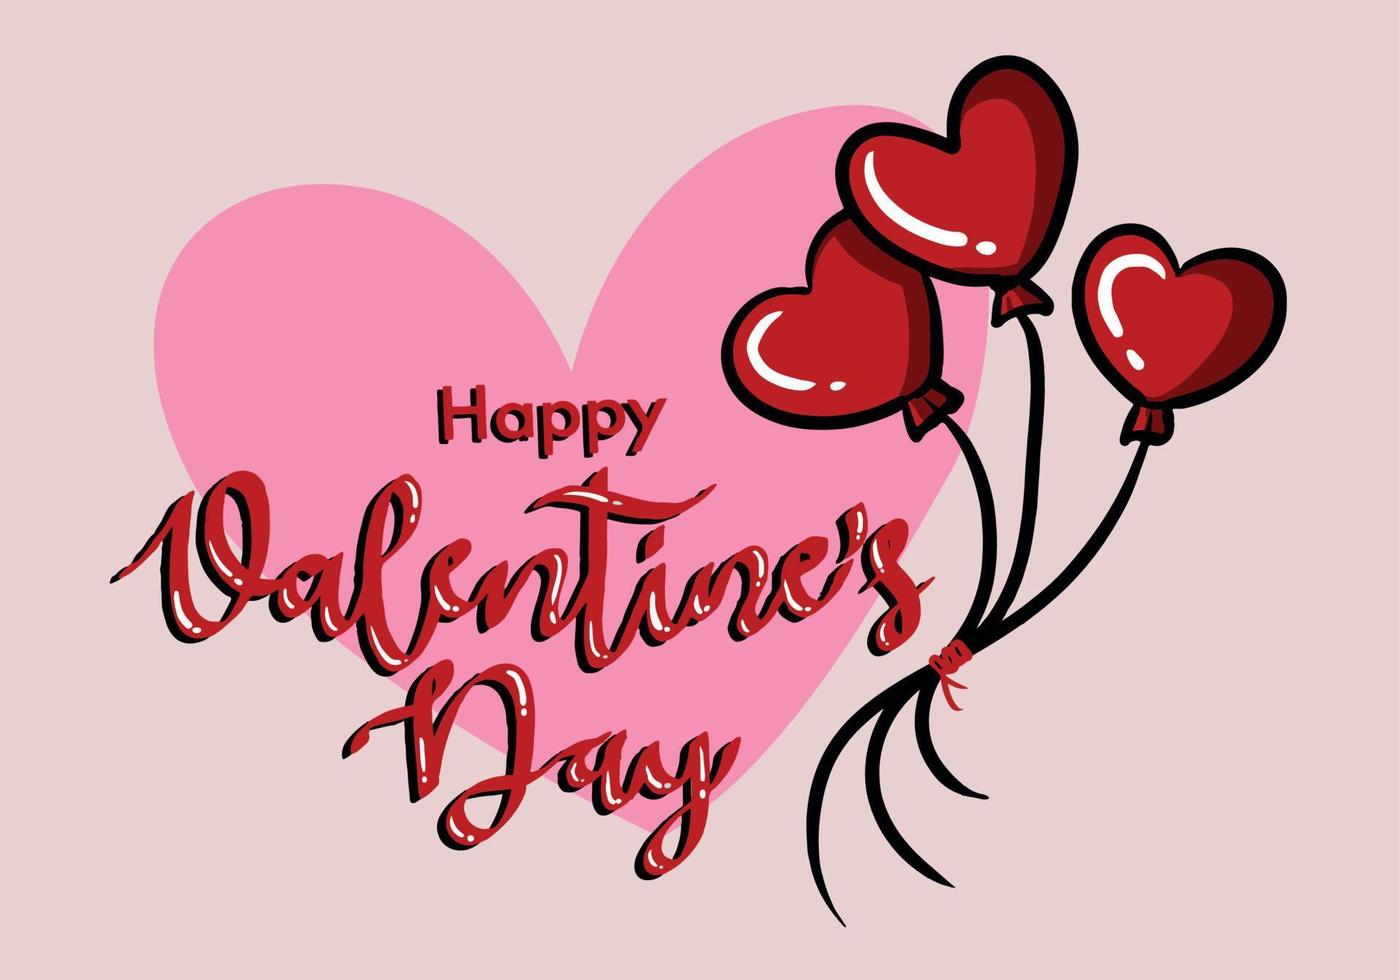 contento San Valentín día vector diseño. San Valentín día vector con linda corazón forma globos San Valentín día diseño para póster, social medios de comunicación, bandera o anuncio publicitario.